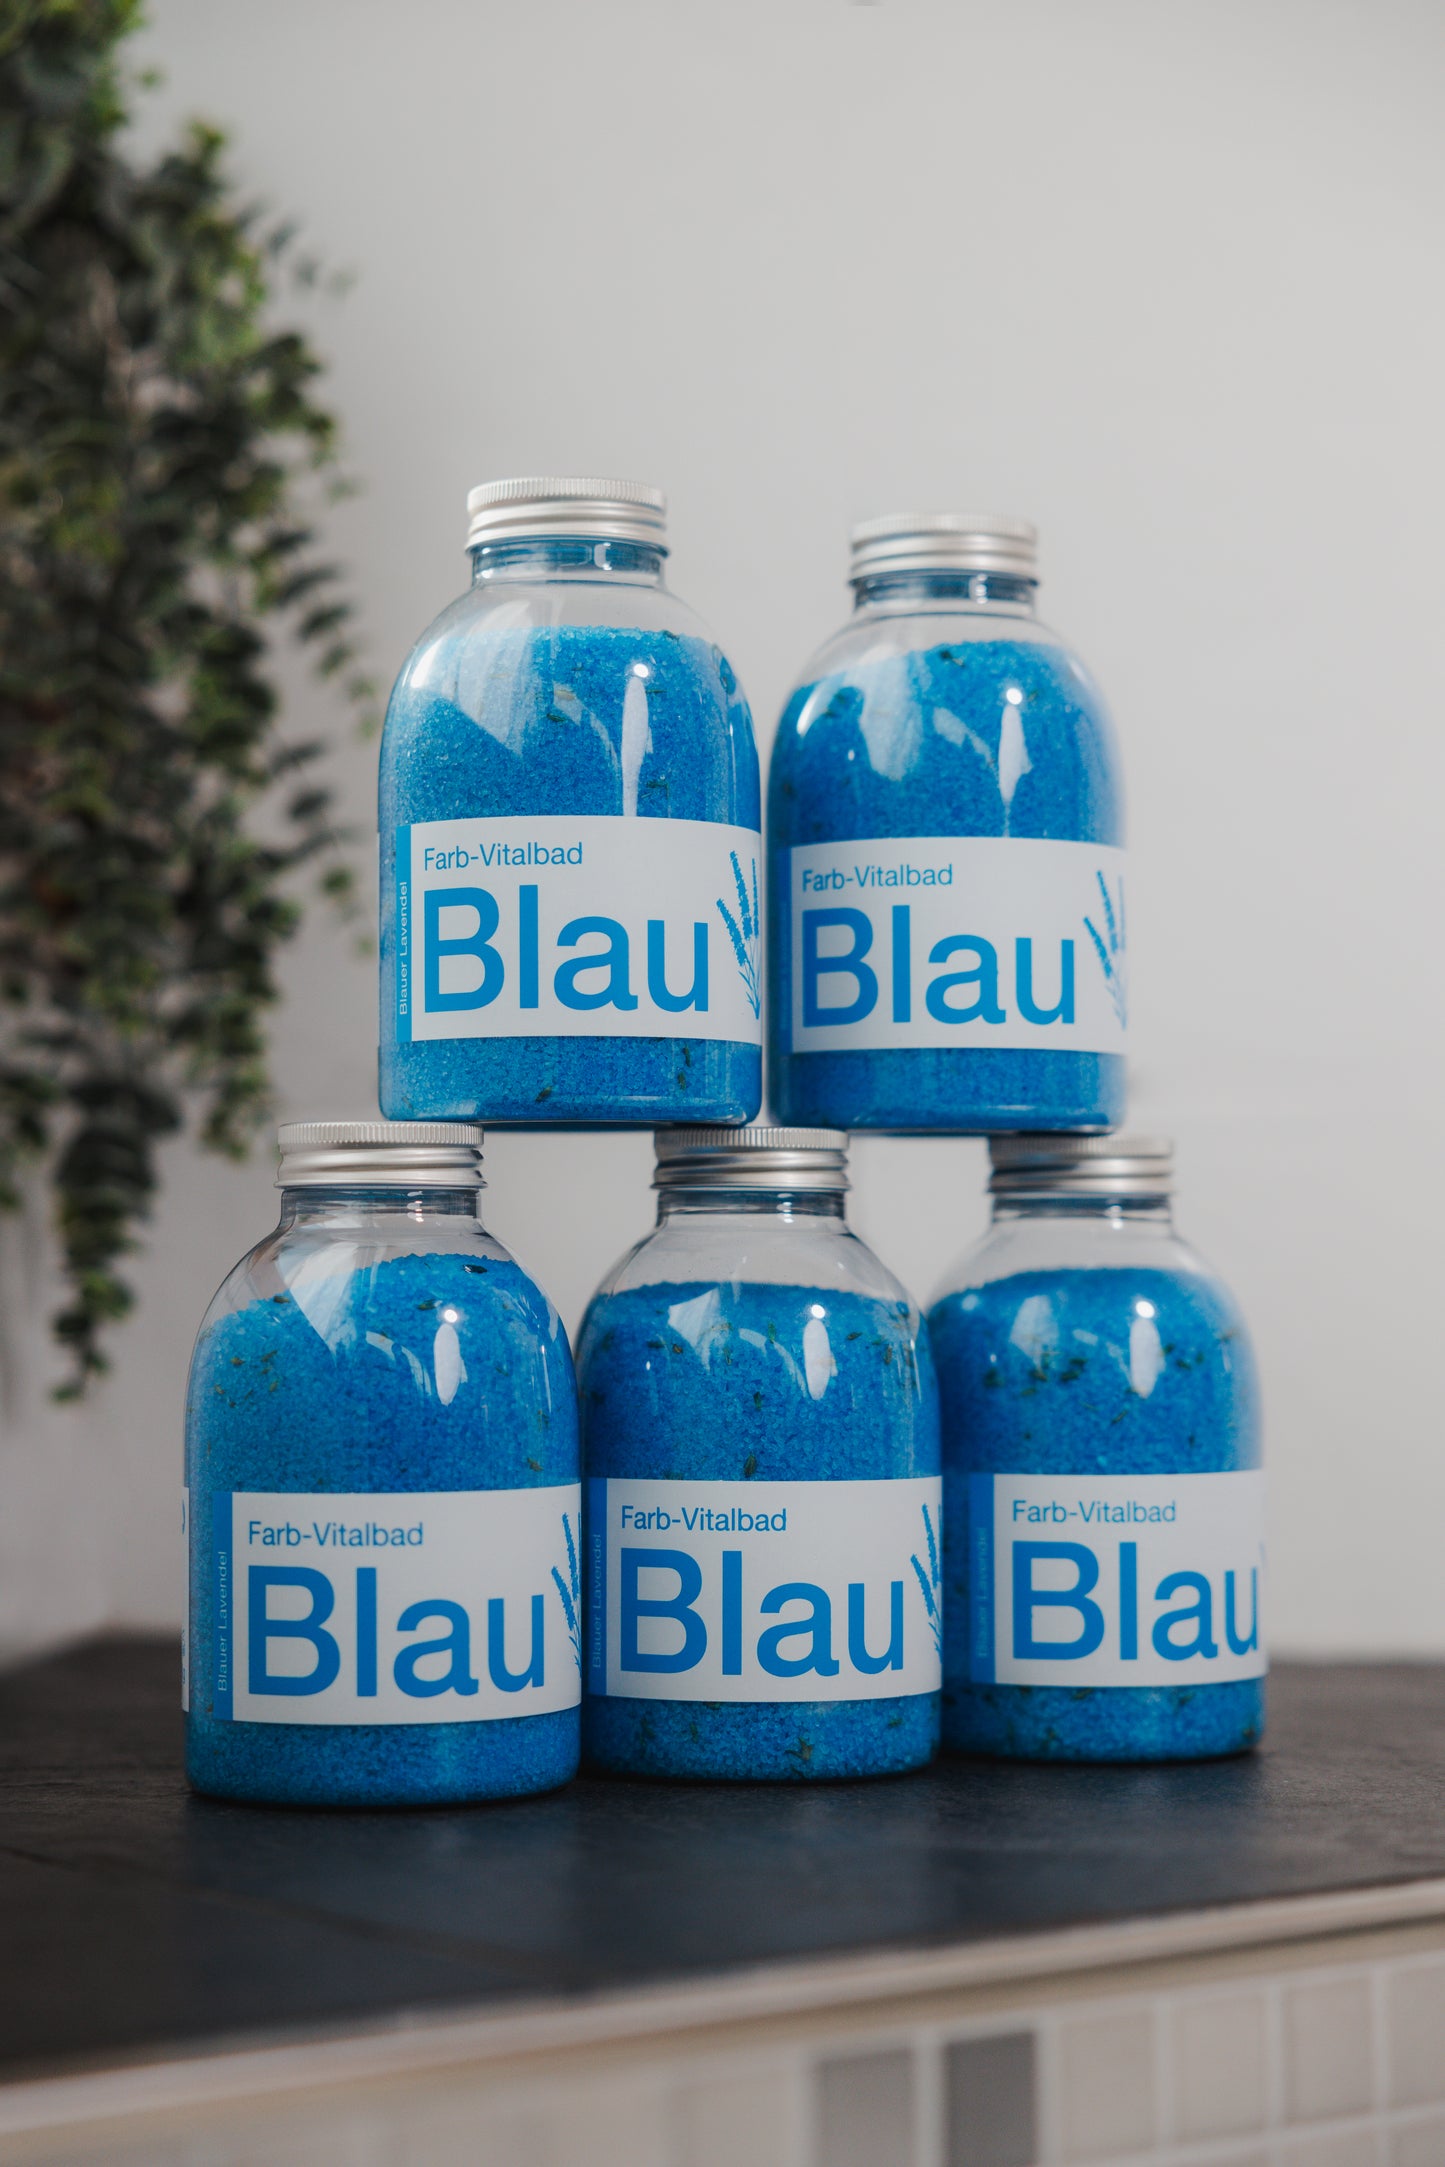 Badesalz; Farb-Vitalbad Blau; 500g; Flasche